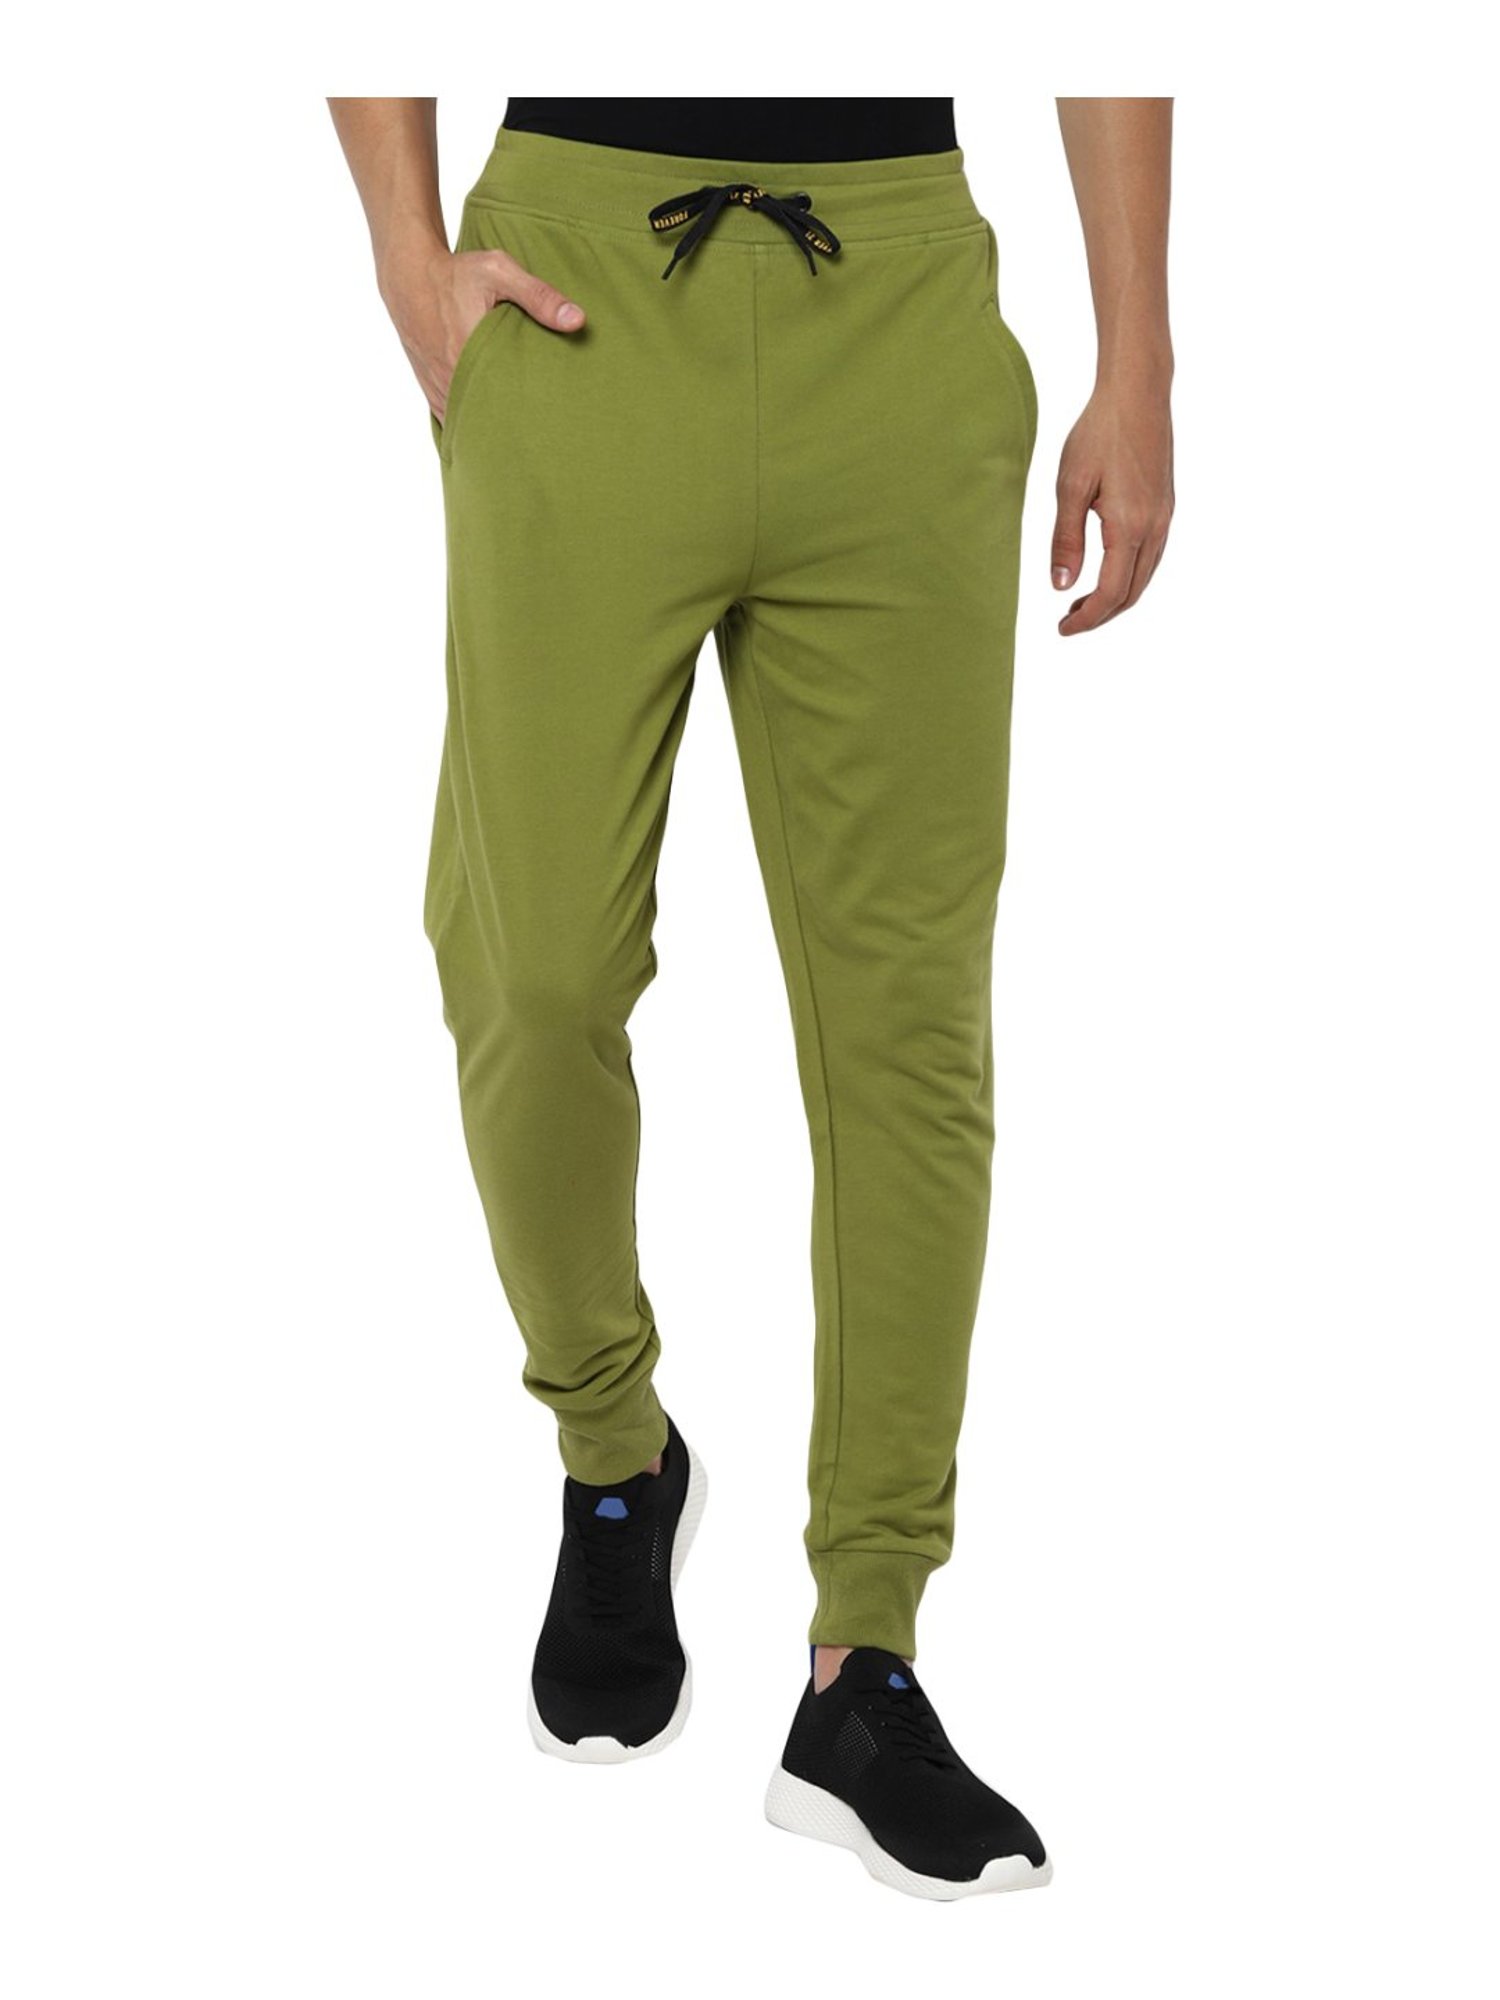 Forever 21  Pants  Jumpsuits  Forever 2 Olive Green Dress Pants   Poshmark